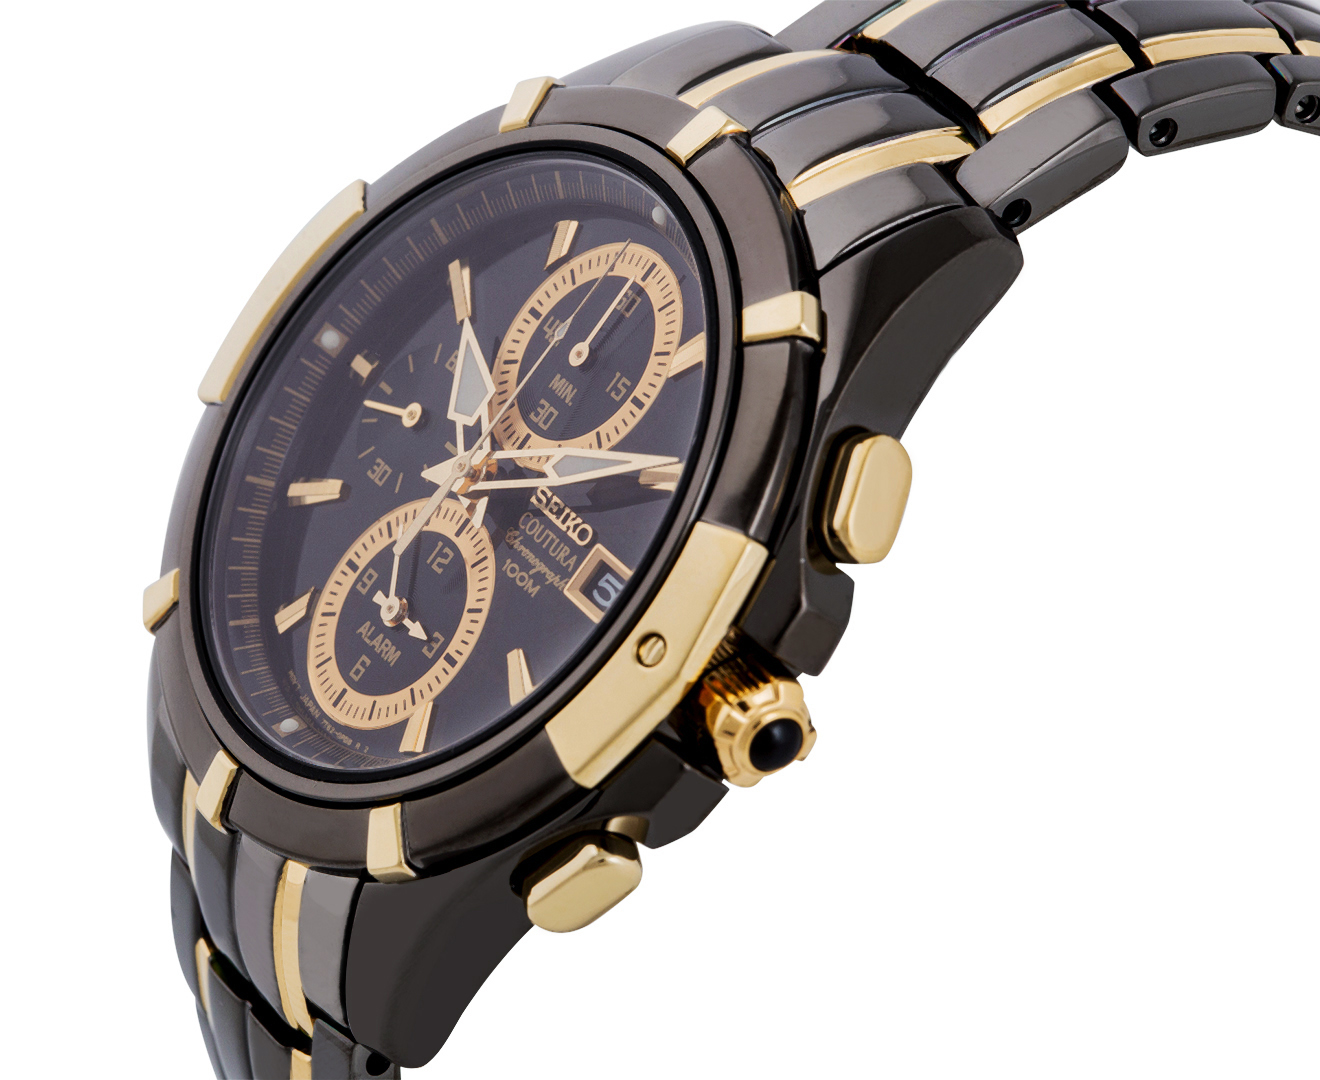 Seiko Men's Coutura Chronograph Watch - Gold/Black 